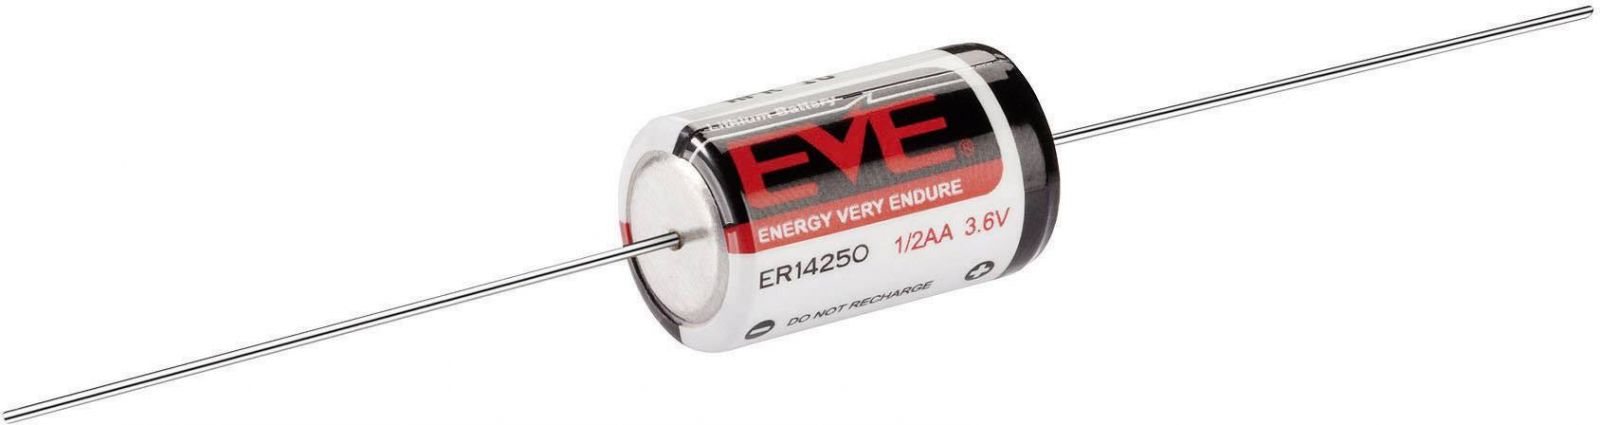 Baterie EVE ER14250 AX 1200mAh Lithium náhrada Saft LS14250 CNA EVE Energy